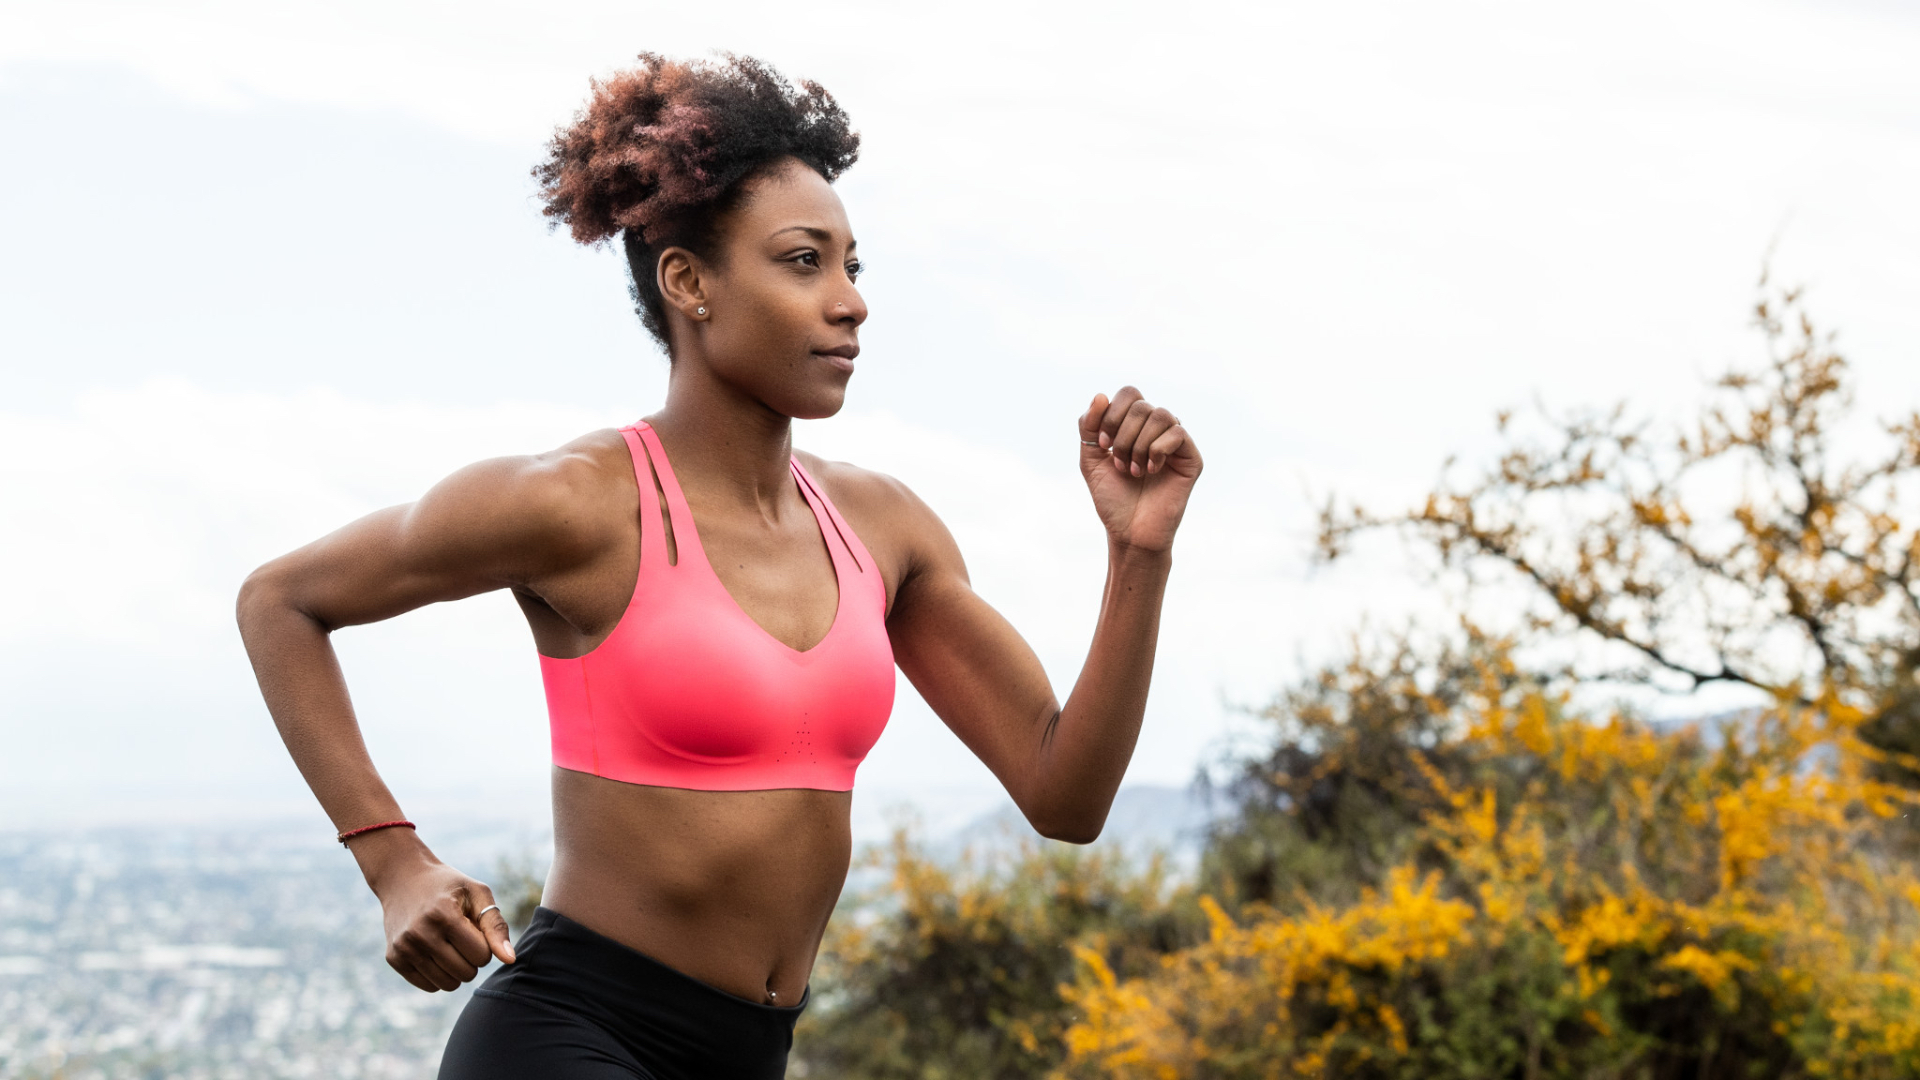 An Ill Fitting Sports Bra Can Make-Or-Break Your Marathon